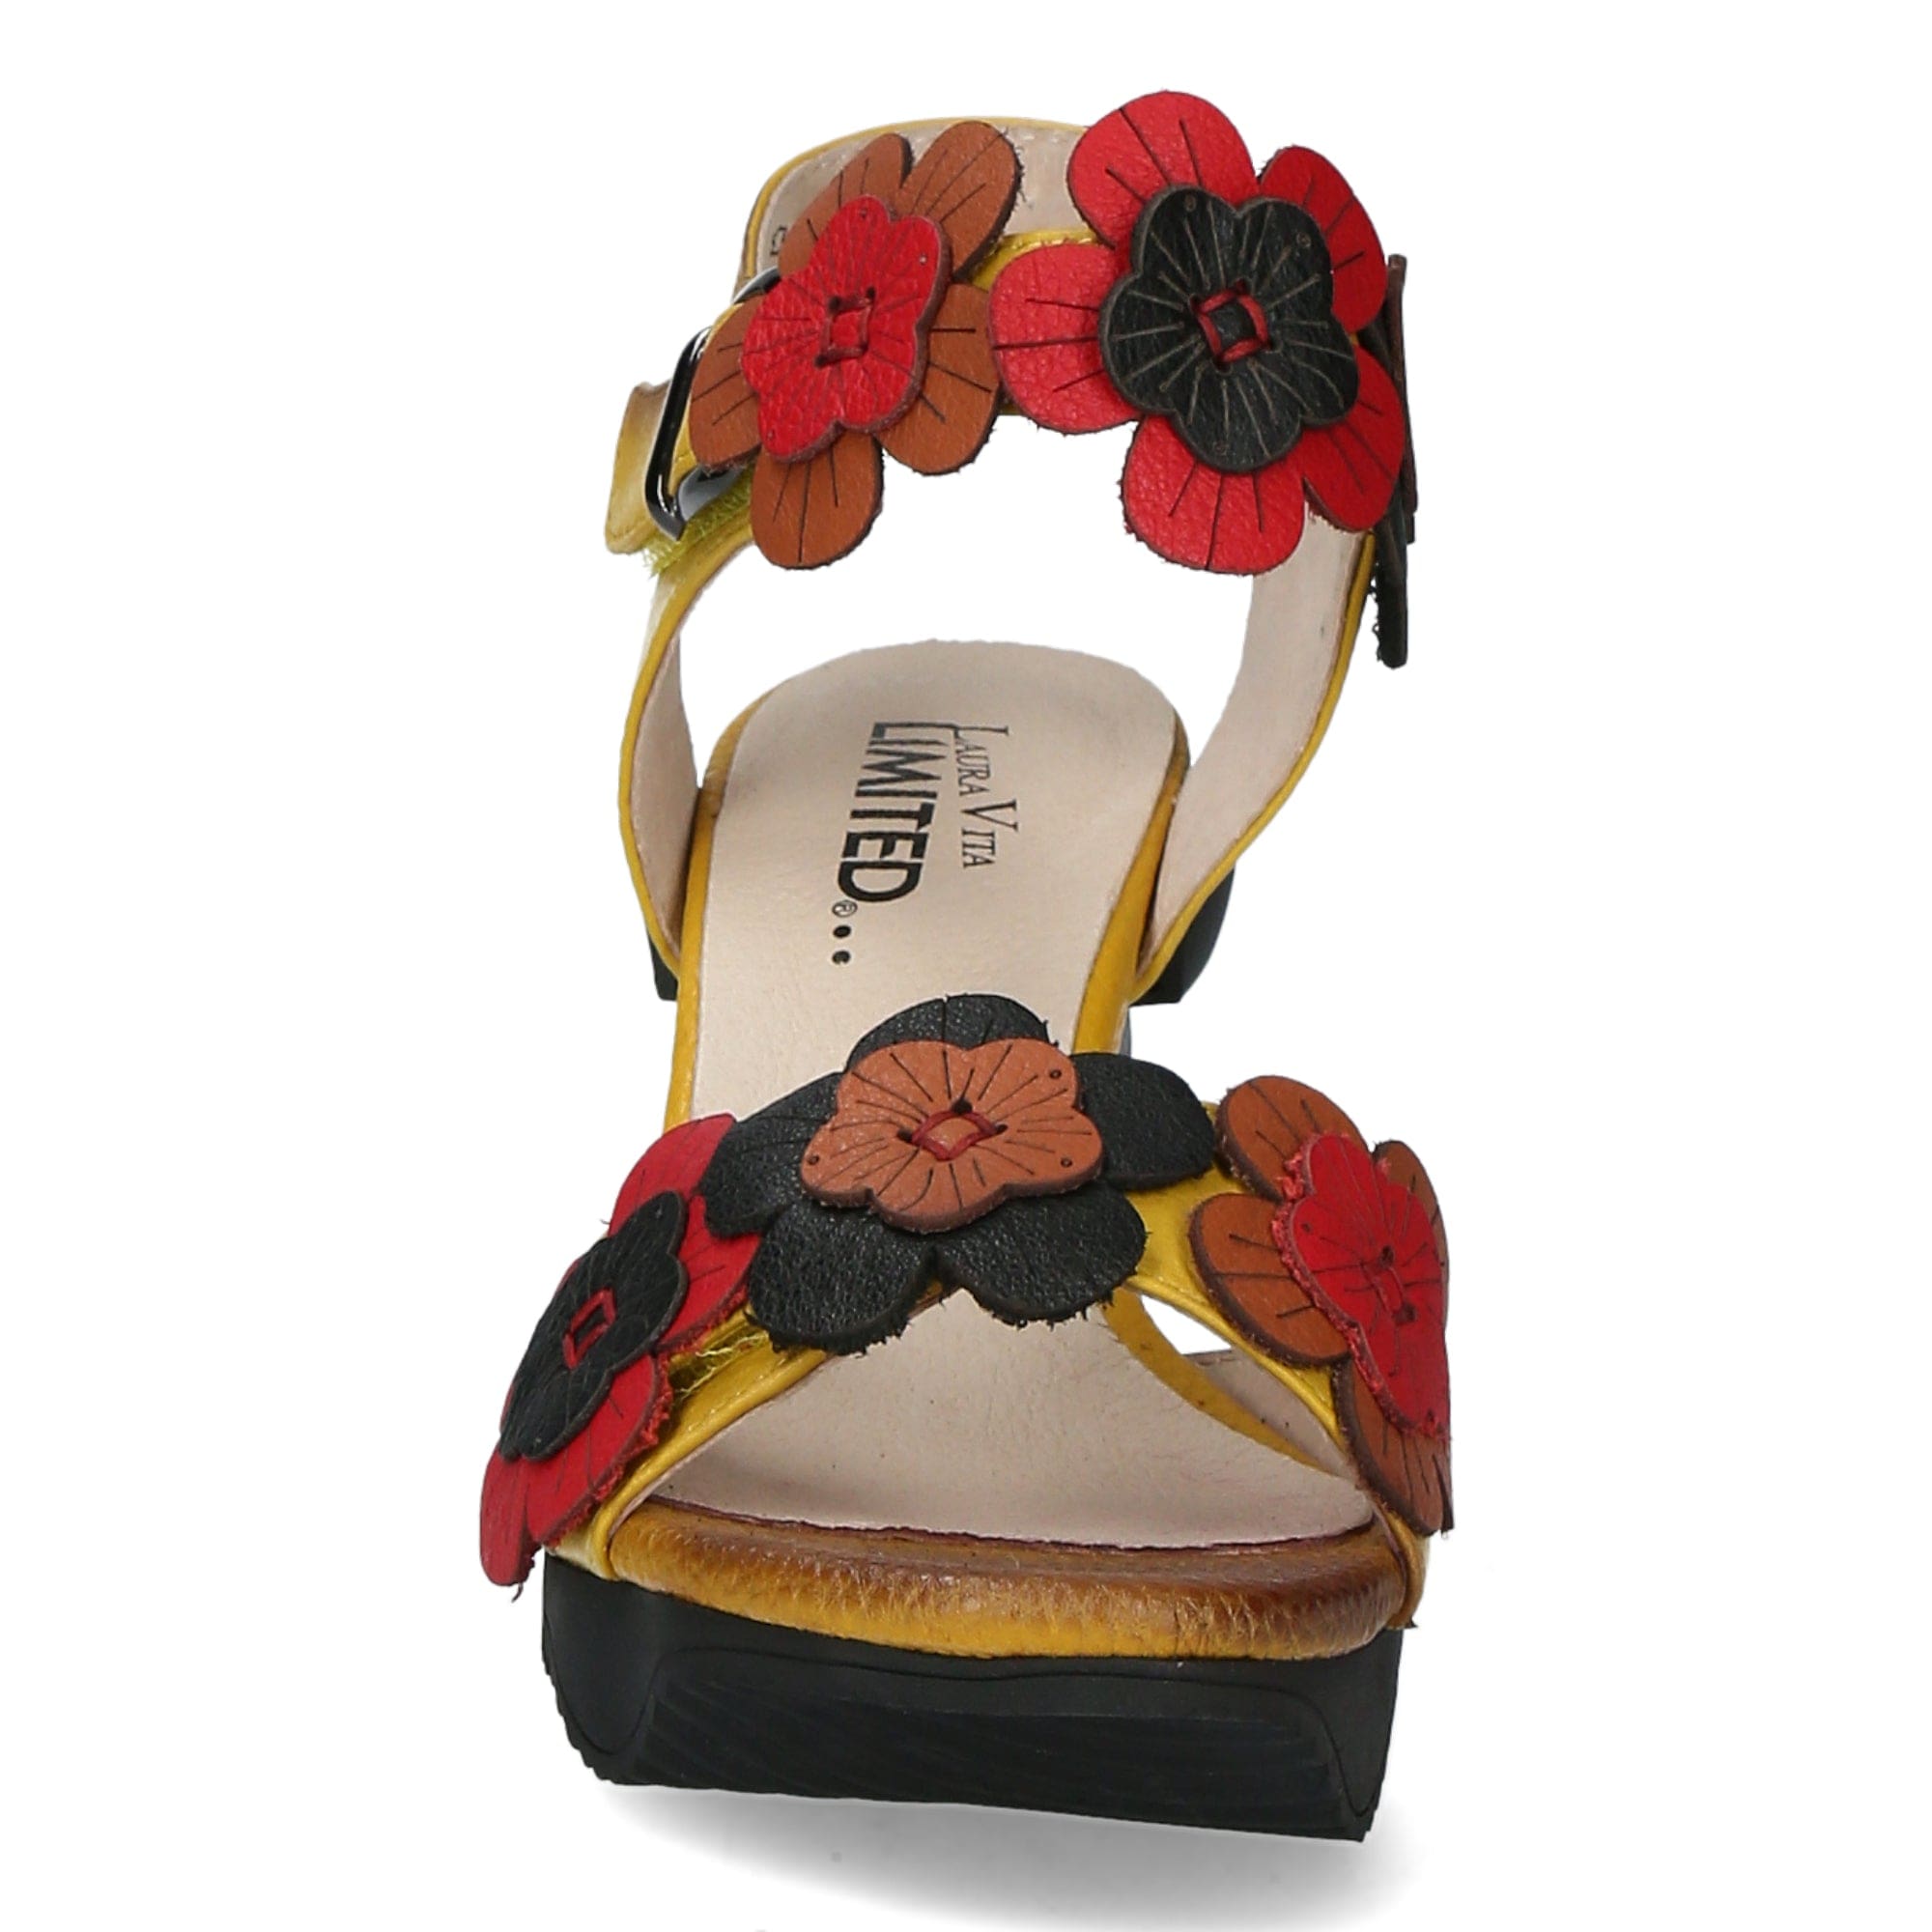 Chaussure ARCMANCEO03 - Sandale